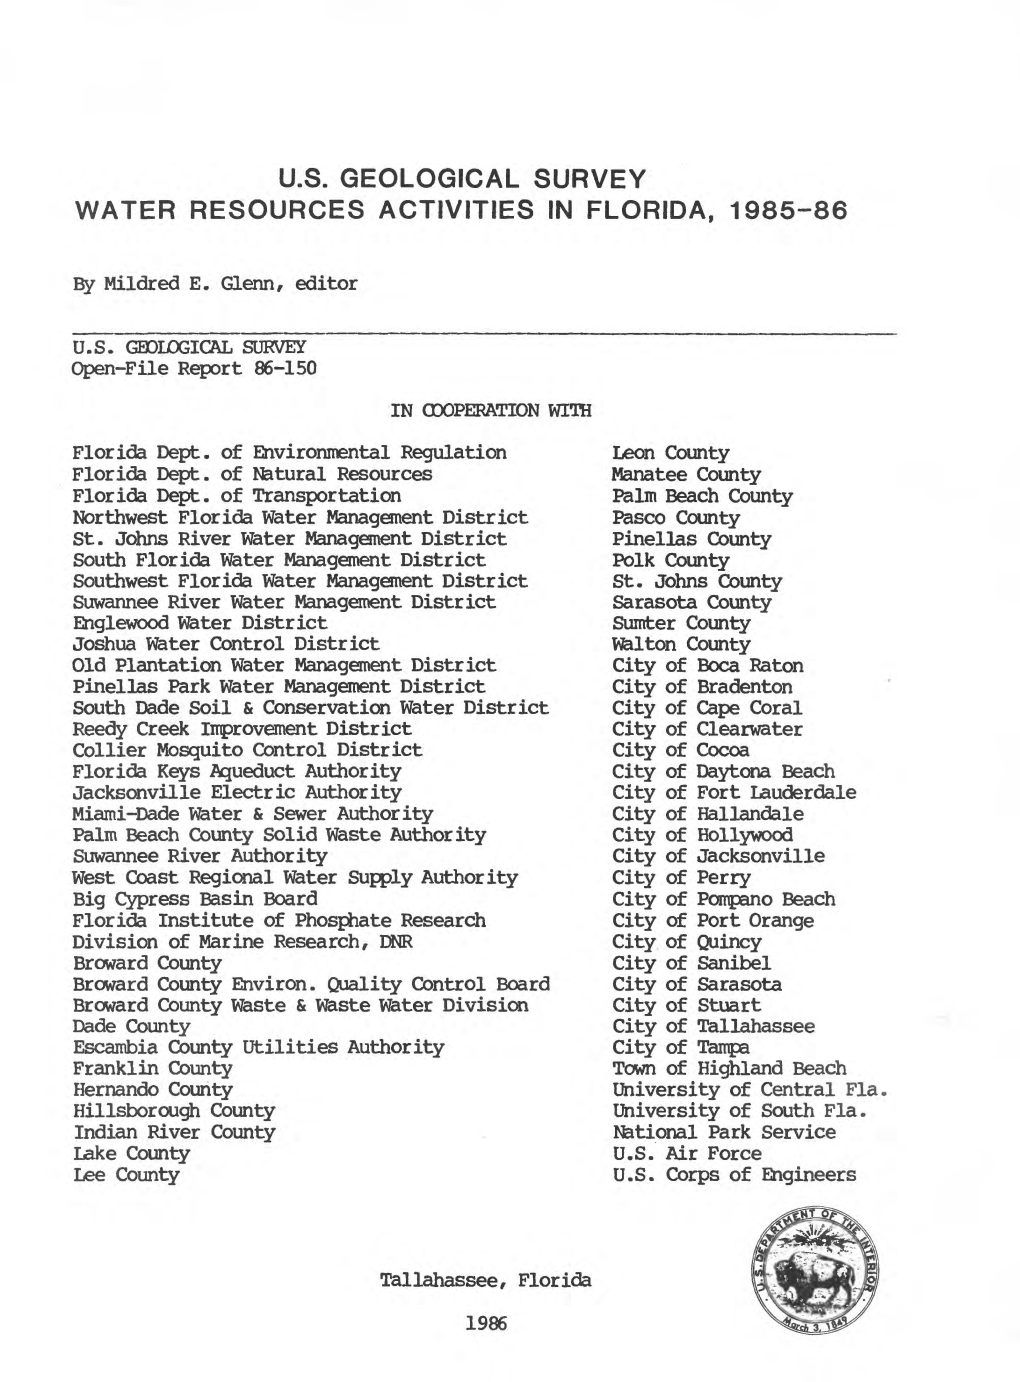 U.S. Geological Survey Water Resources Activities in Florida, 1985-86